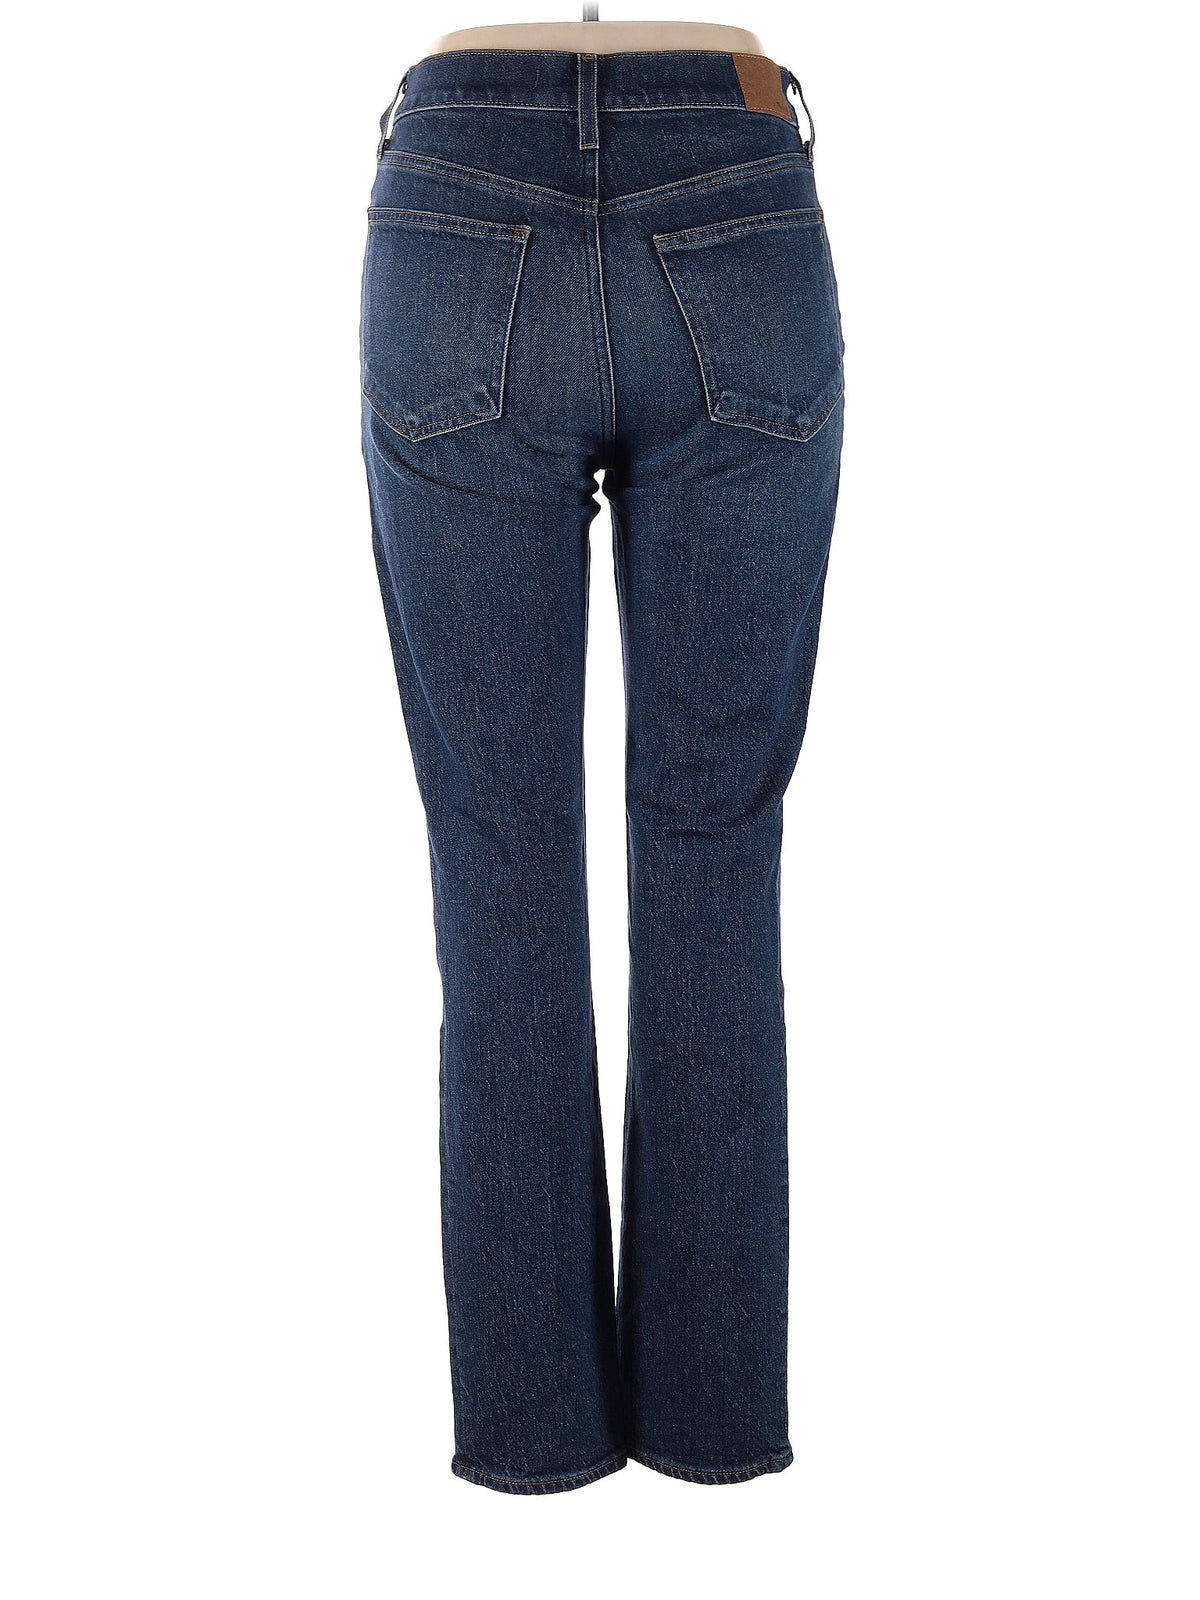 High-Rise Straight-leg Jeans in Medium Wash waist size - 23